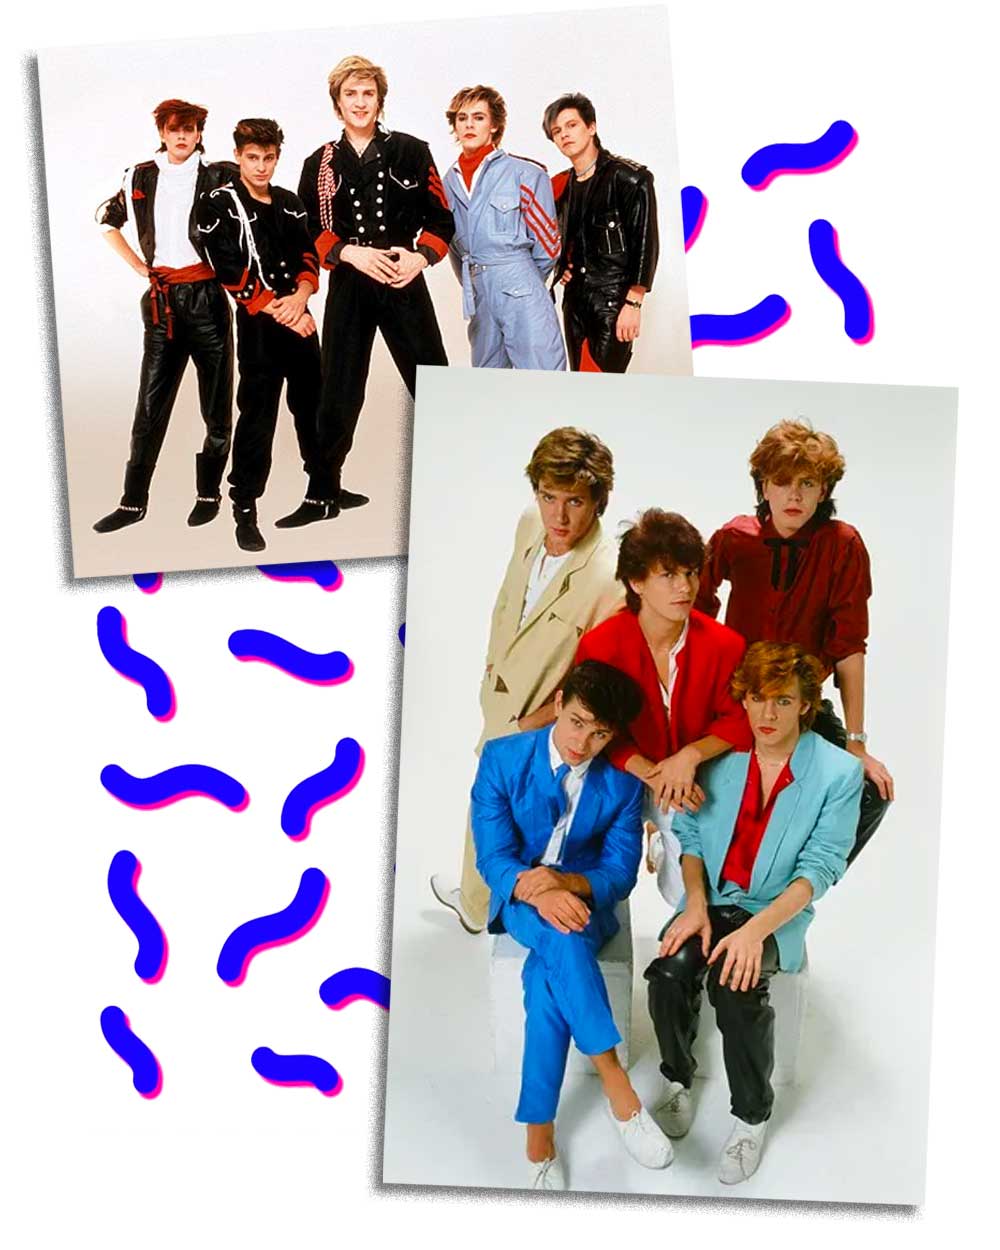 Duran Duran Influence on the 80s Fashion